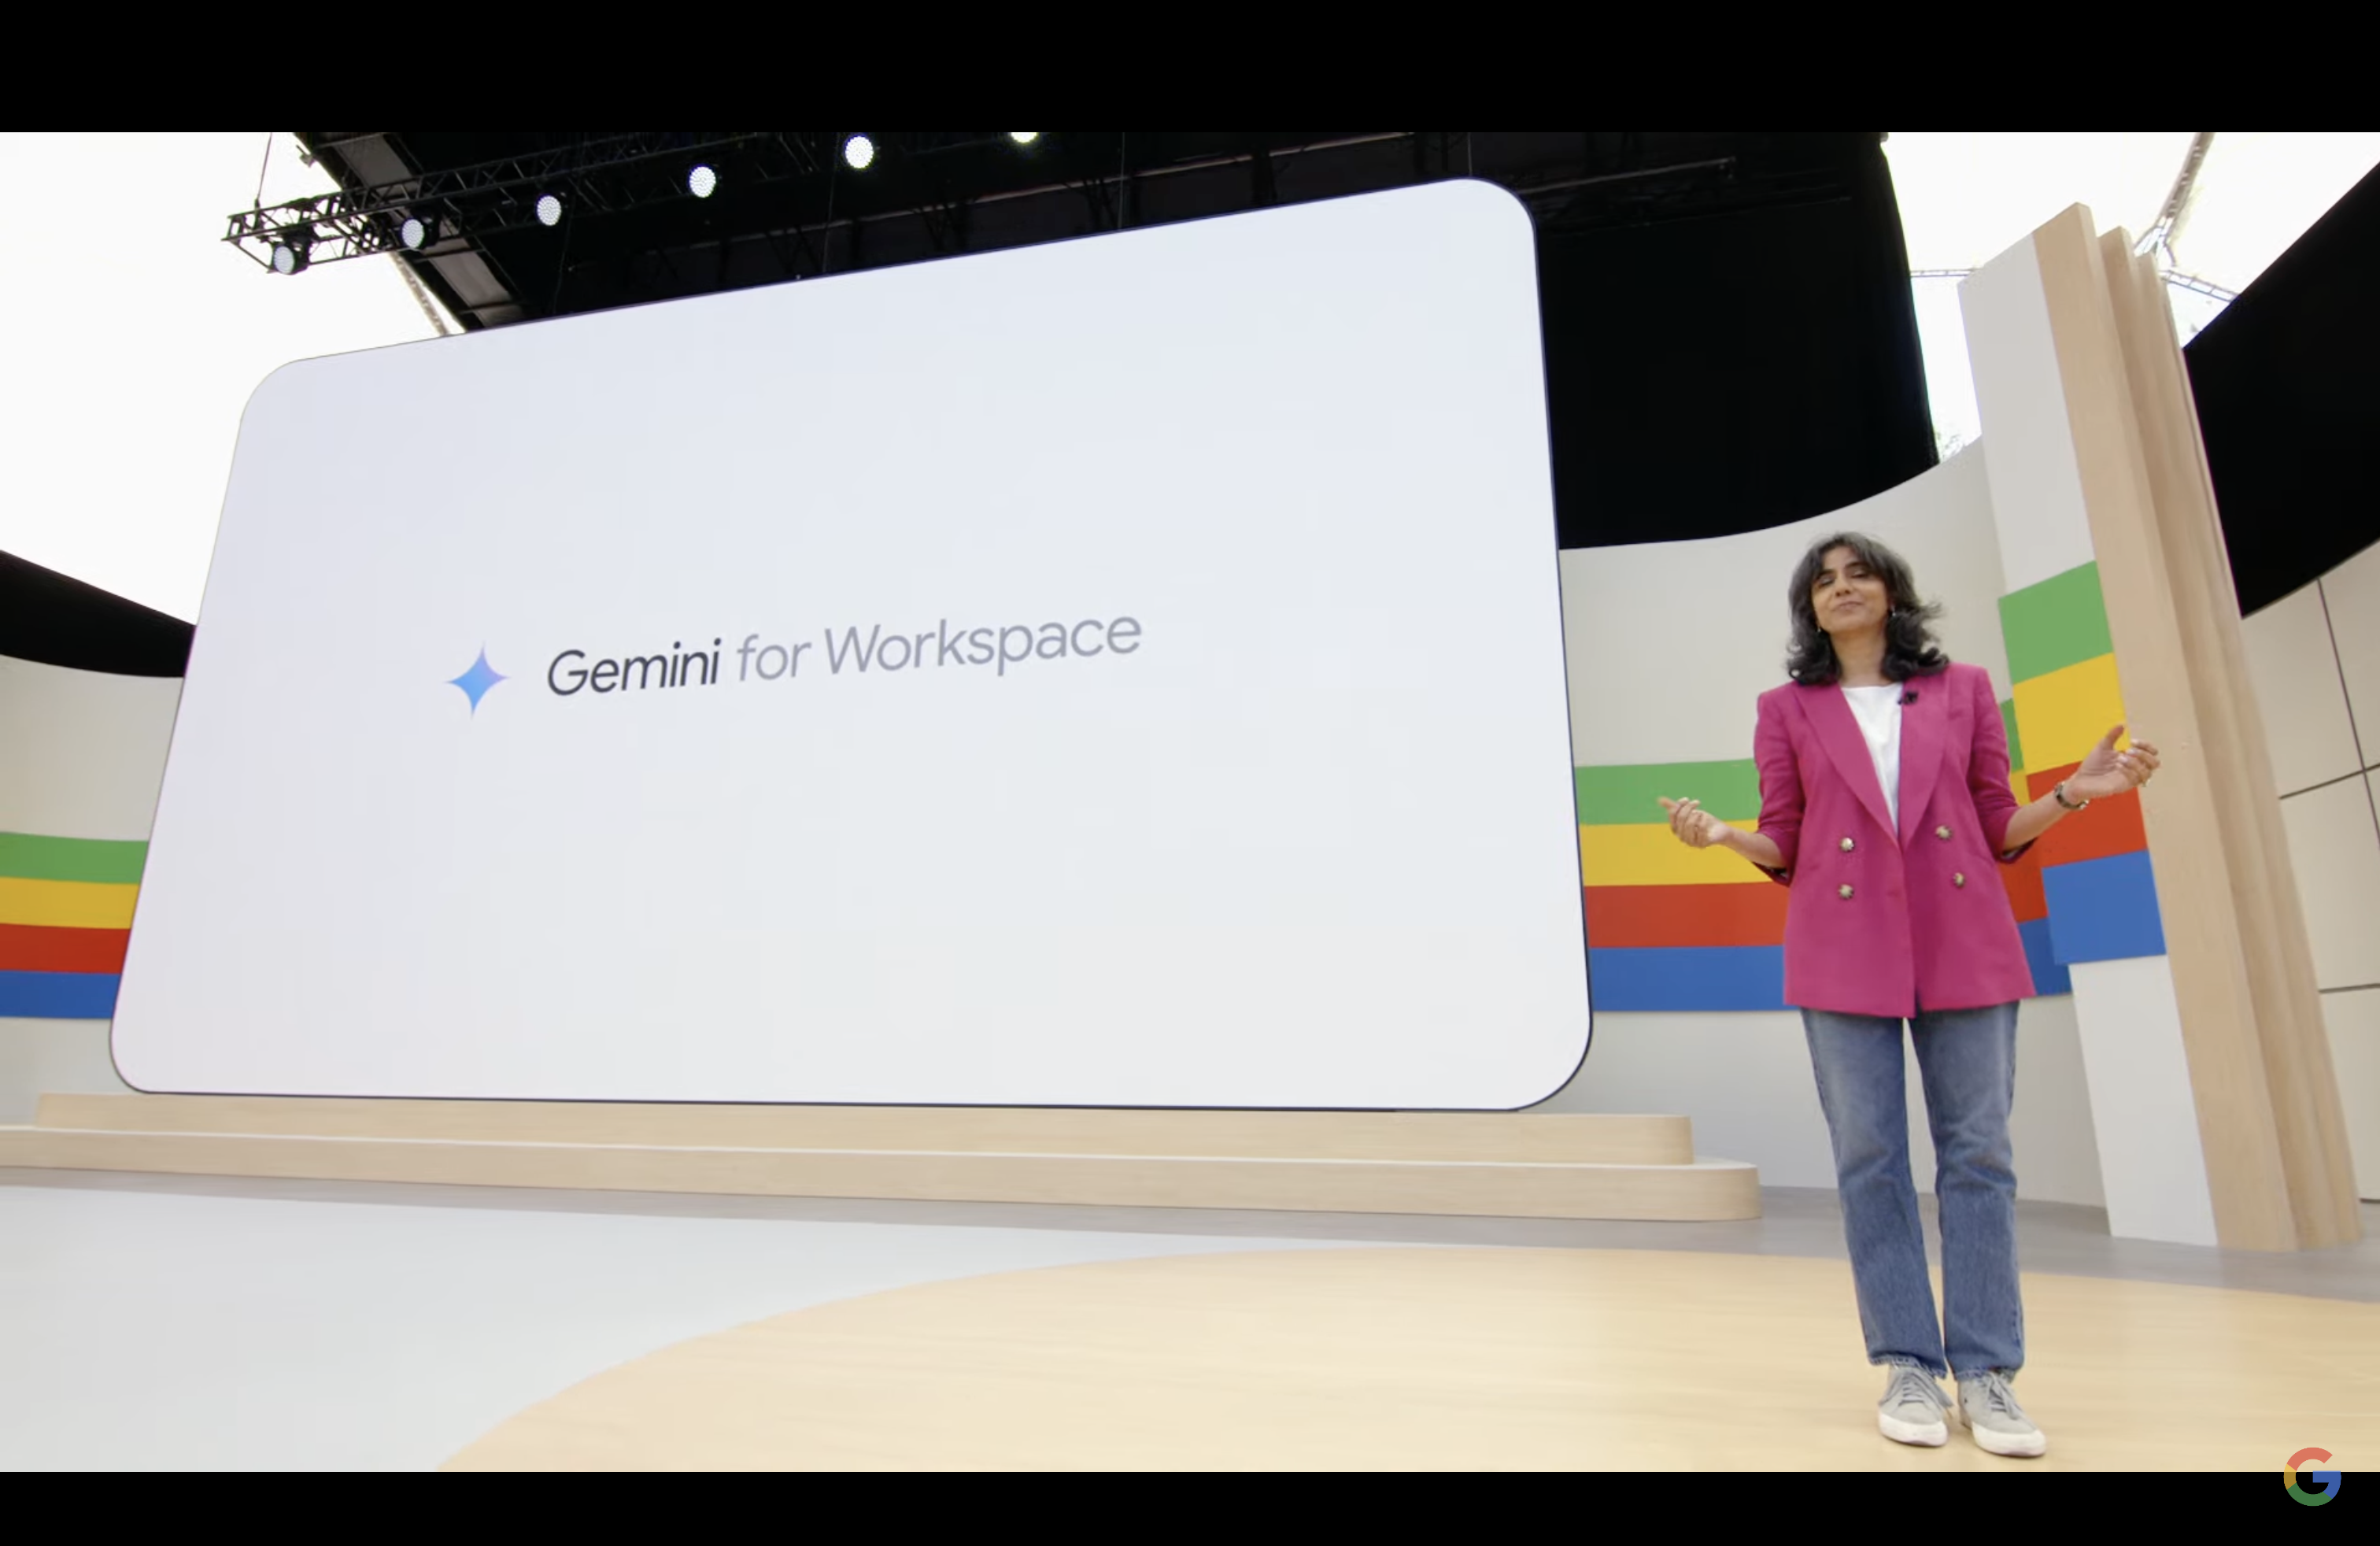 Gemini for Workspace at Google I/O